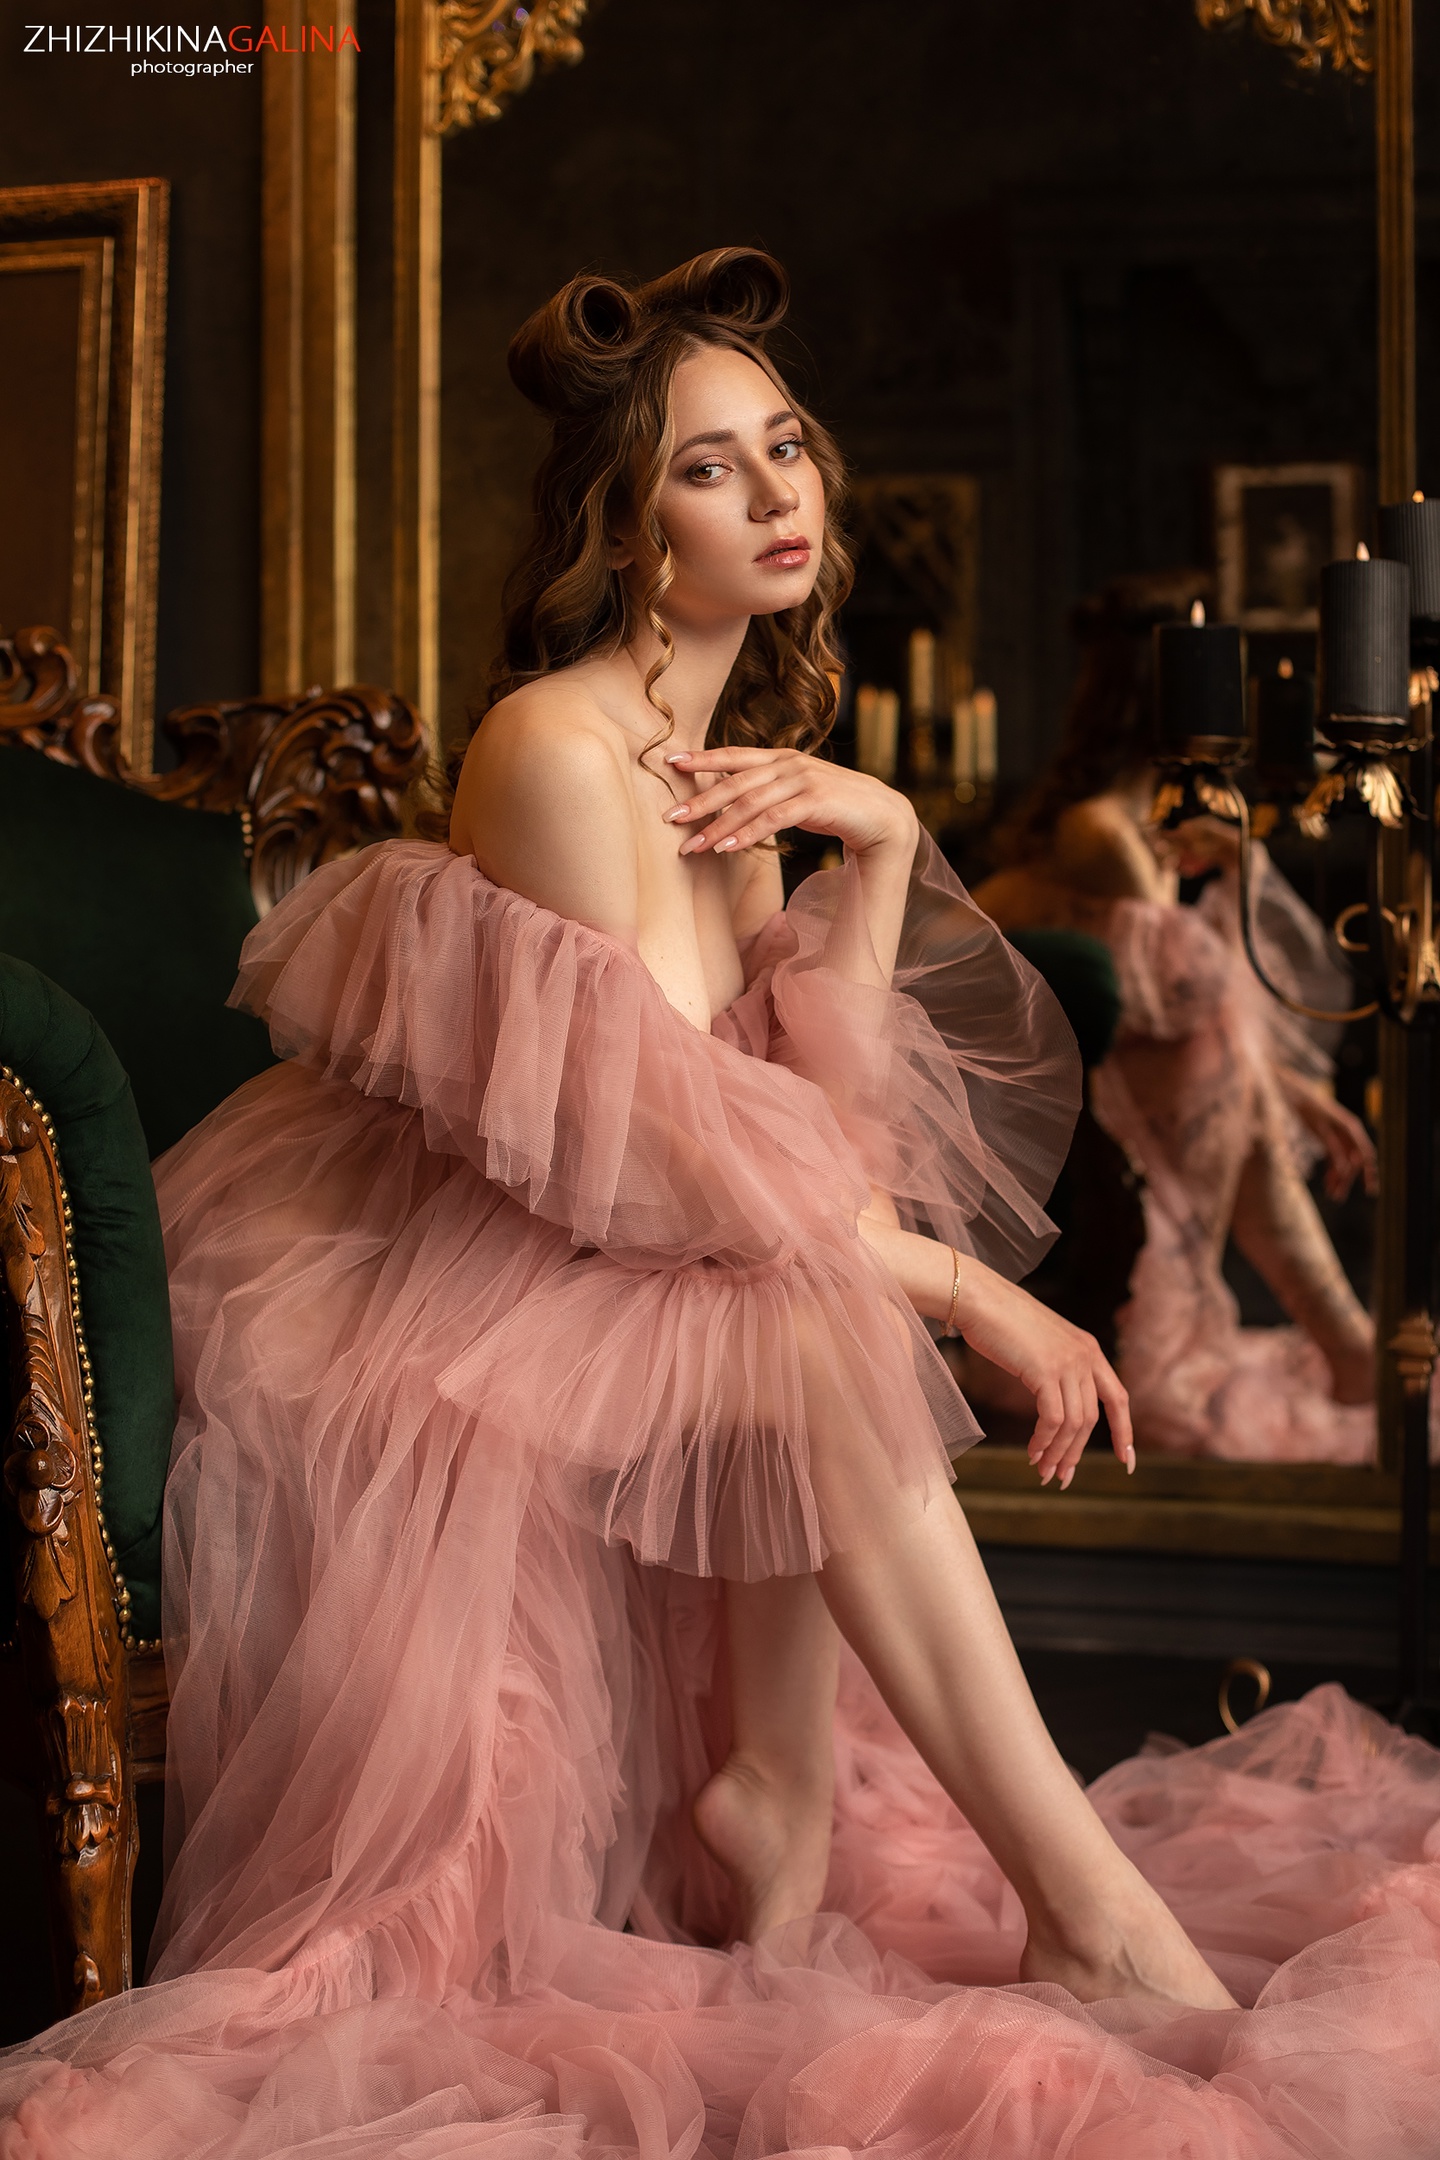 Galina Zhizhikina Brunette Portrait Reflection Women Model Pink Dress Mirror Barefoot Women Indoors 1440x2160